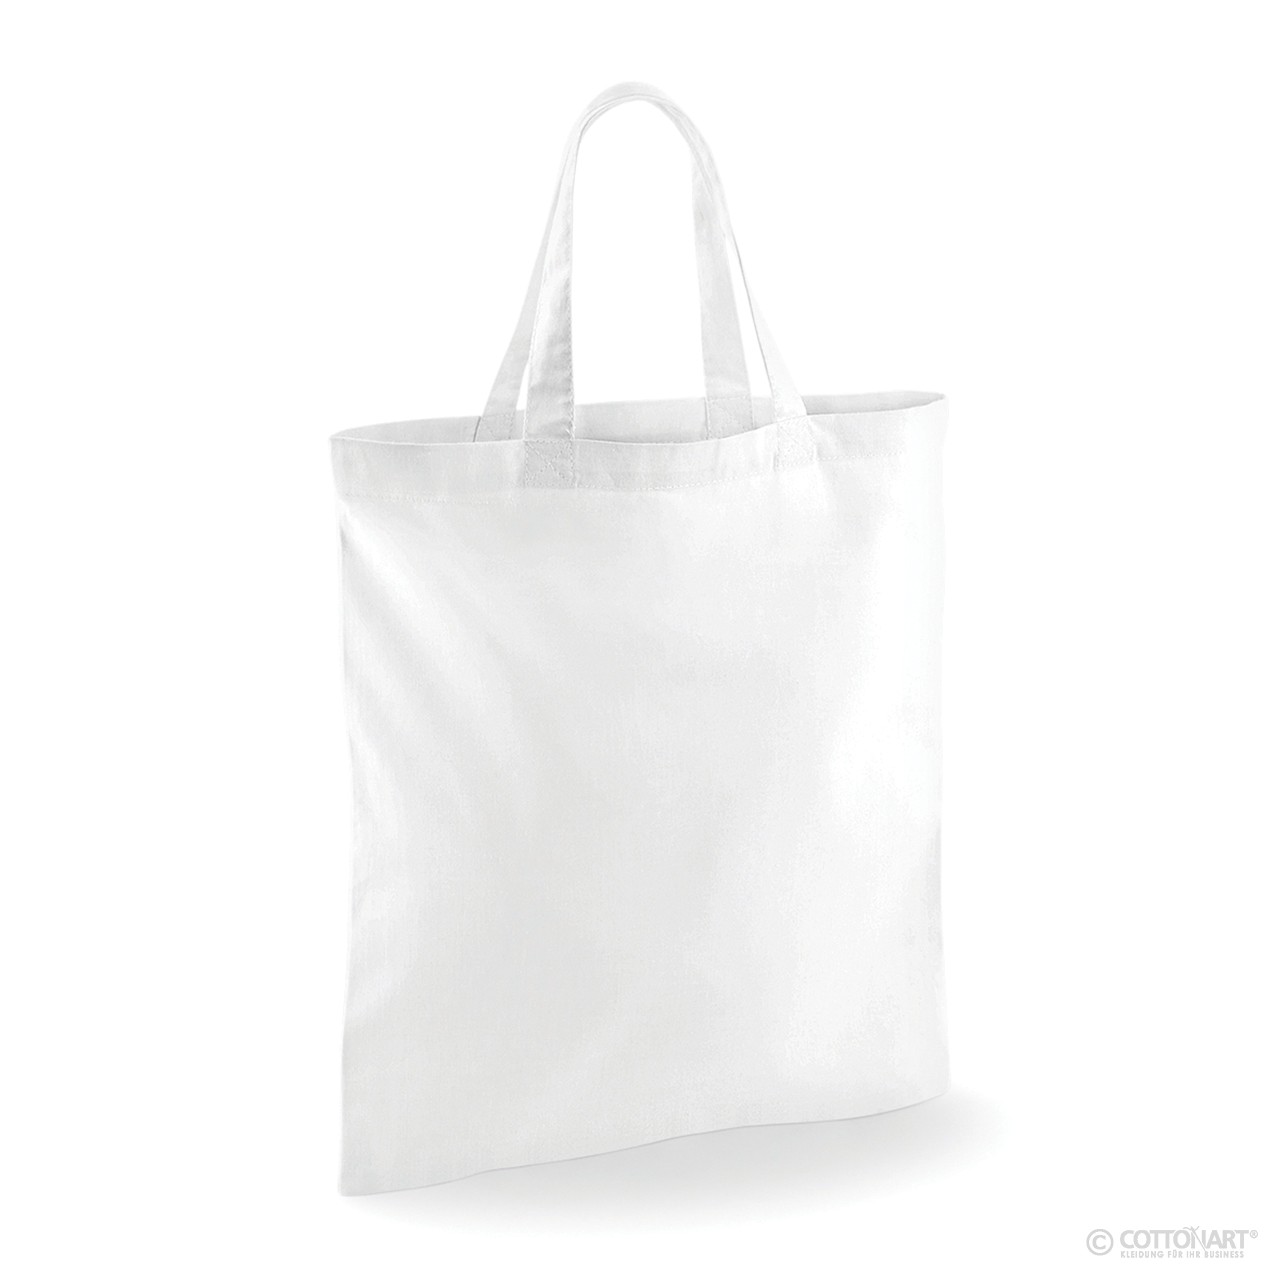 Cotton bag short handles 38 x 42 cm Westford Mill® White